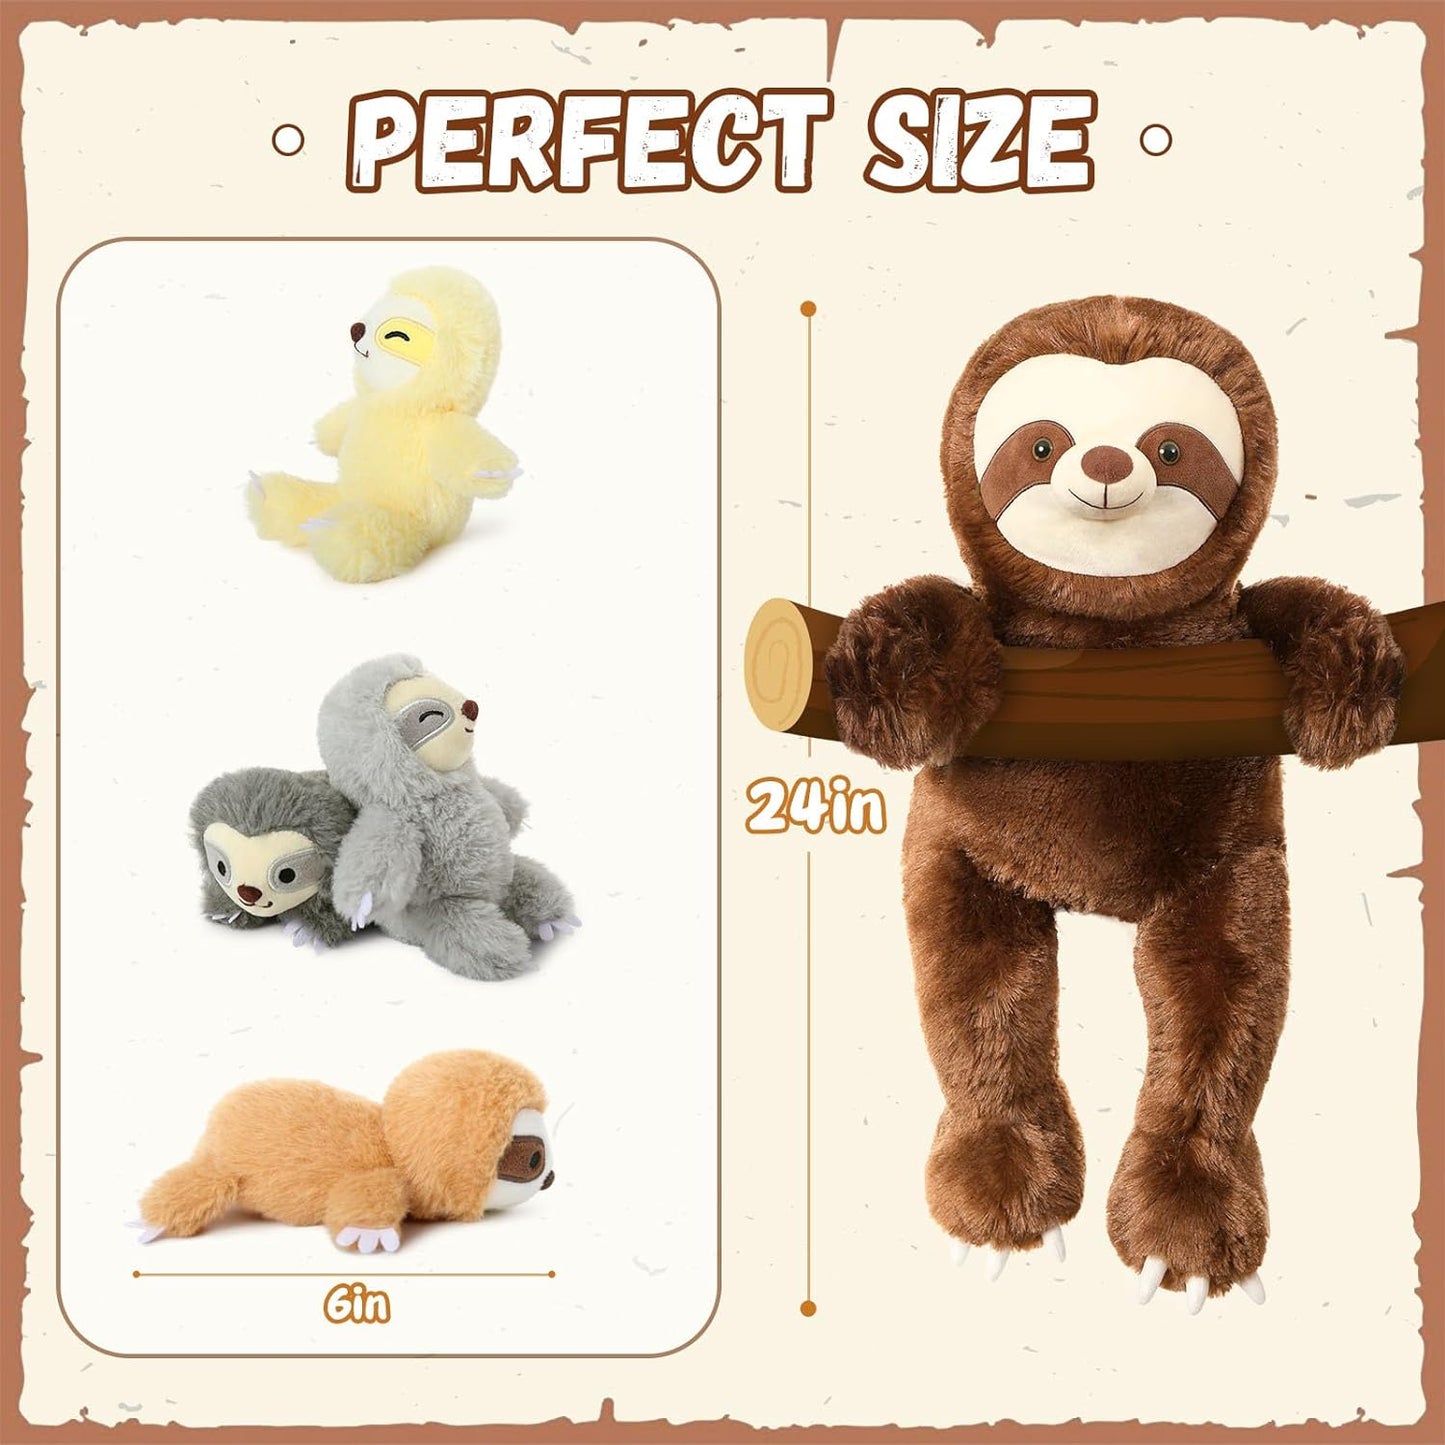 Sloth Stuffed Animal Toys, 24 Inches - MorisMos Stuffed Animals